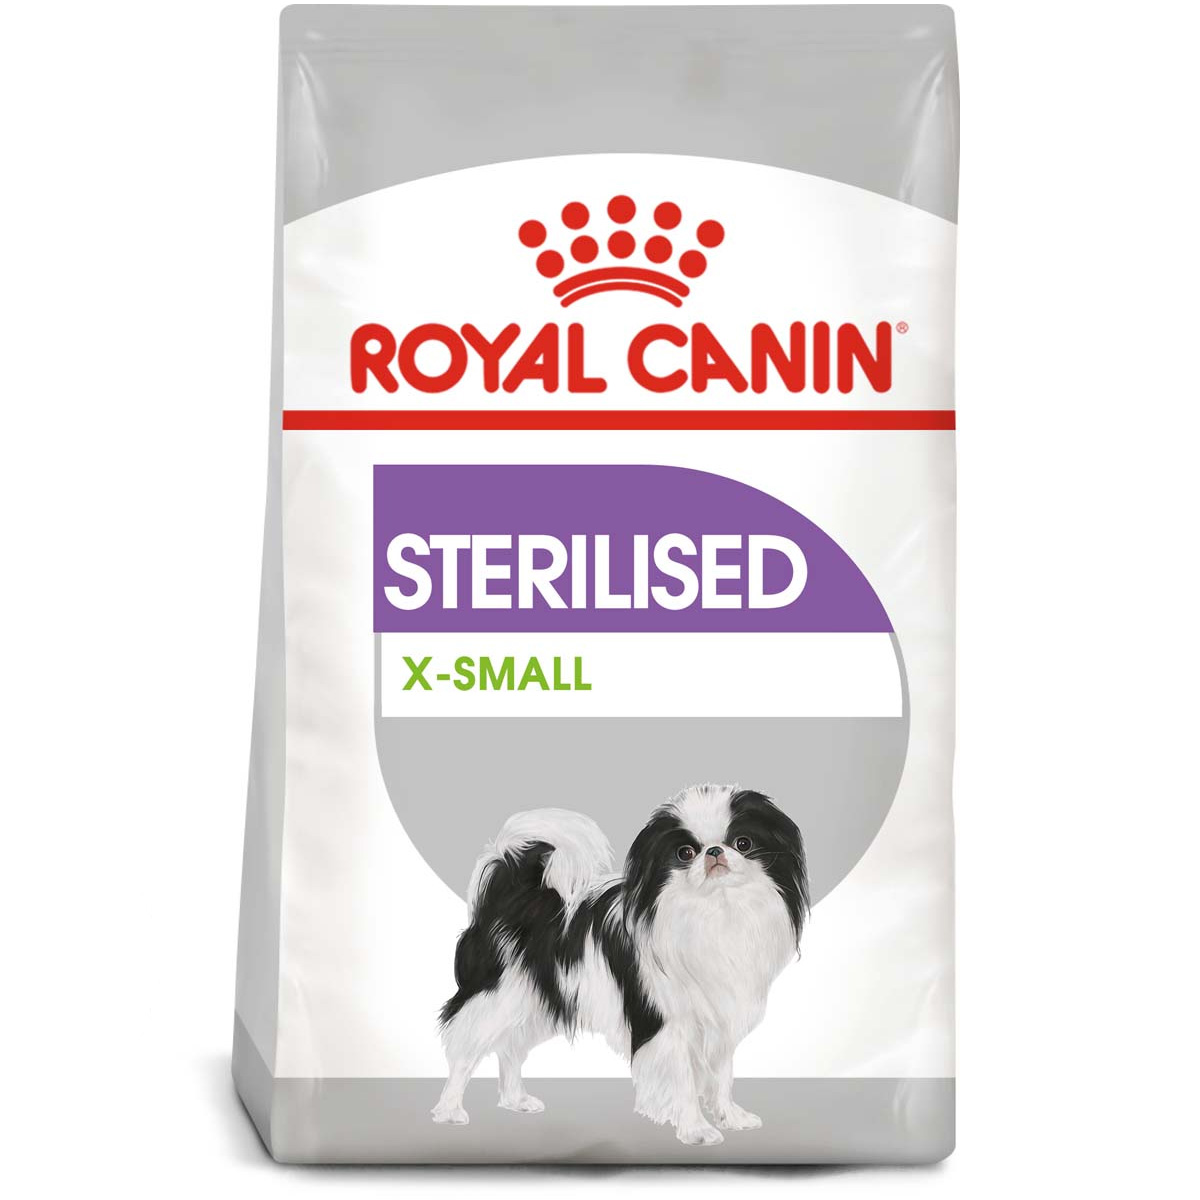 ROYAL CANIN STERILISED X-SMALL Trockenfutter für kastrierte sehr kleine Hunde 1,5kg